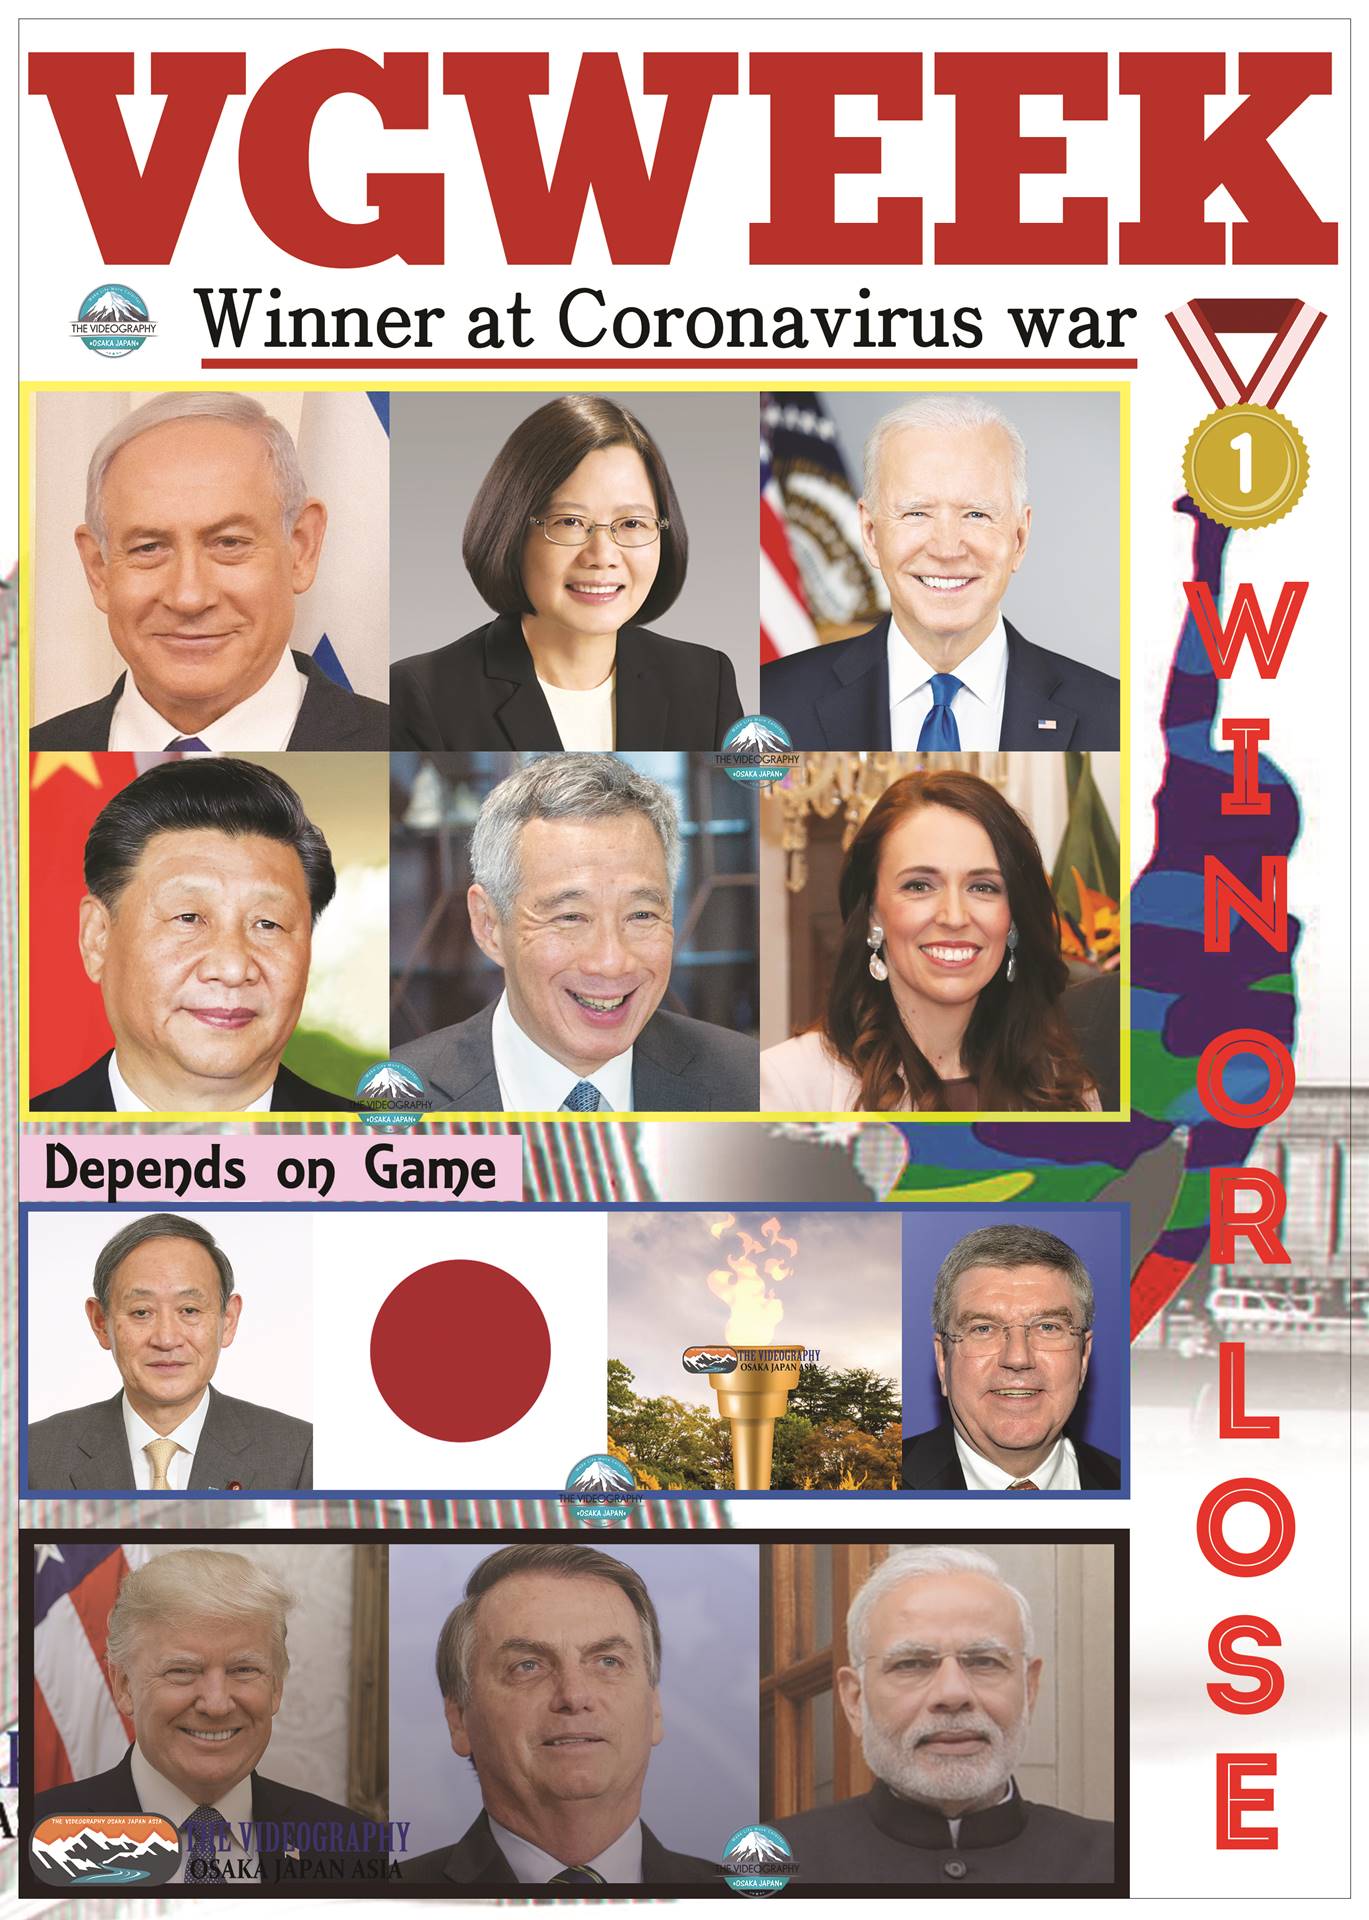 Win against Corona War・コロナ時代の勝者 ニューズウィーク風表紙 Newsweek style Cover. 第一次湾岸戦争の勝者と敗者を表現した雑誌 ニューズウィーク風表紙・パロディカバー。